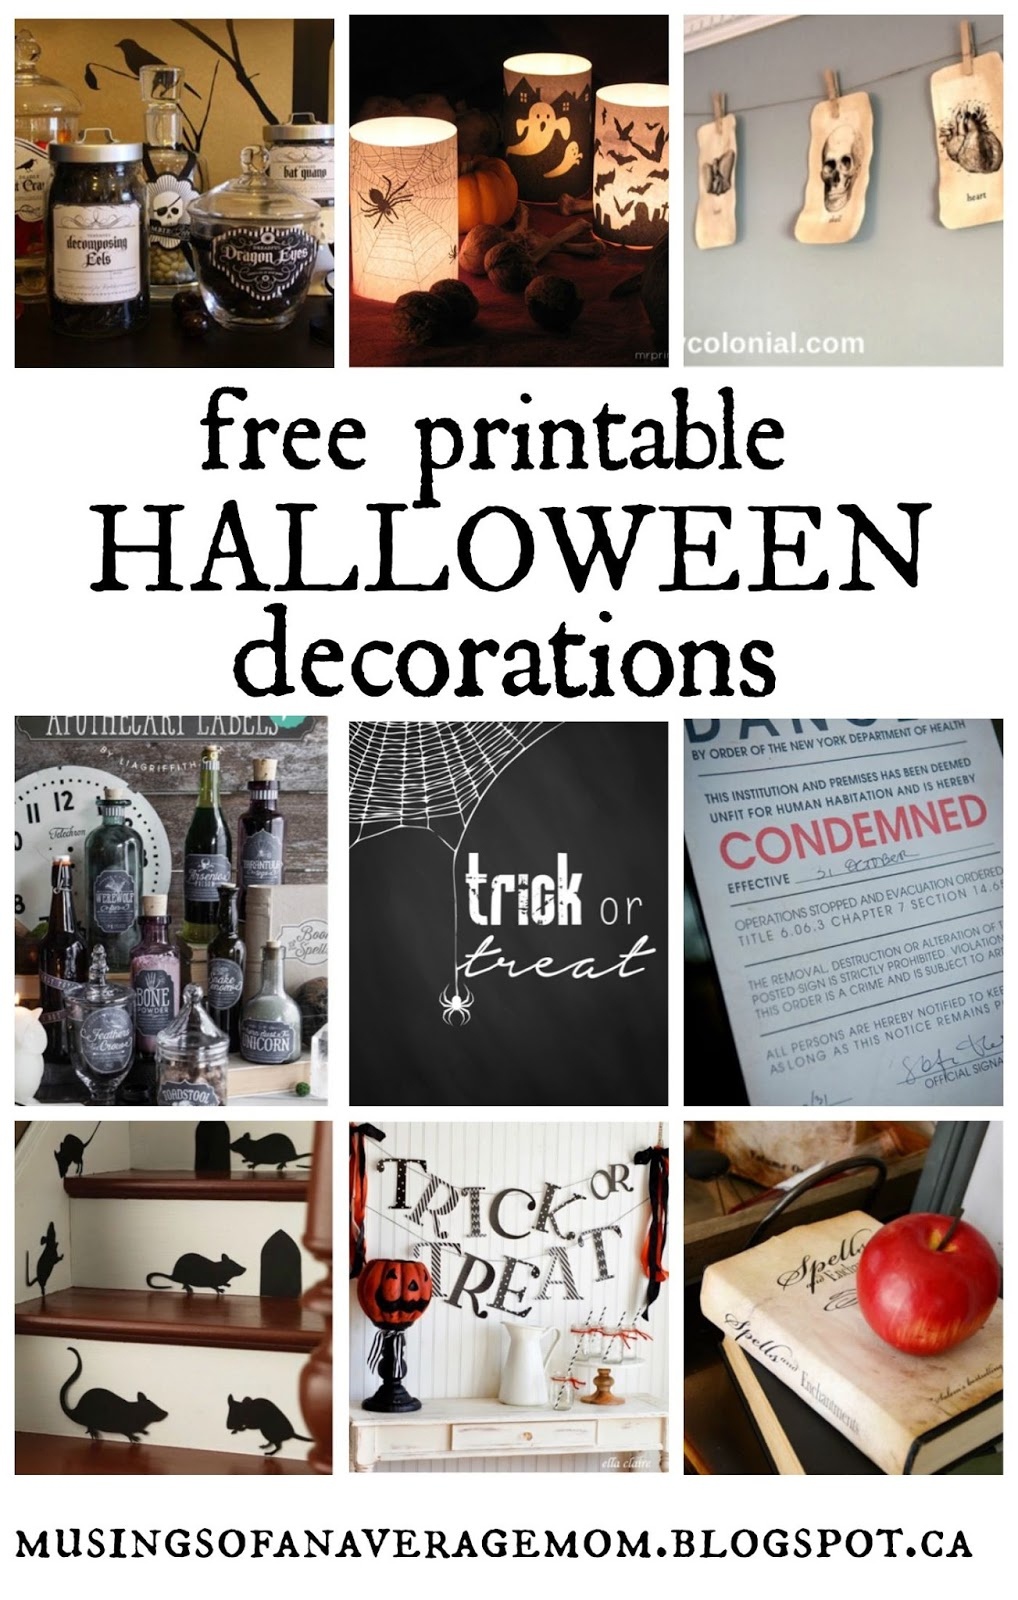 Musings Of An Average Mom: Free Printable Halloween Decorations - Free Printable Halloween Decorations